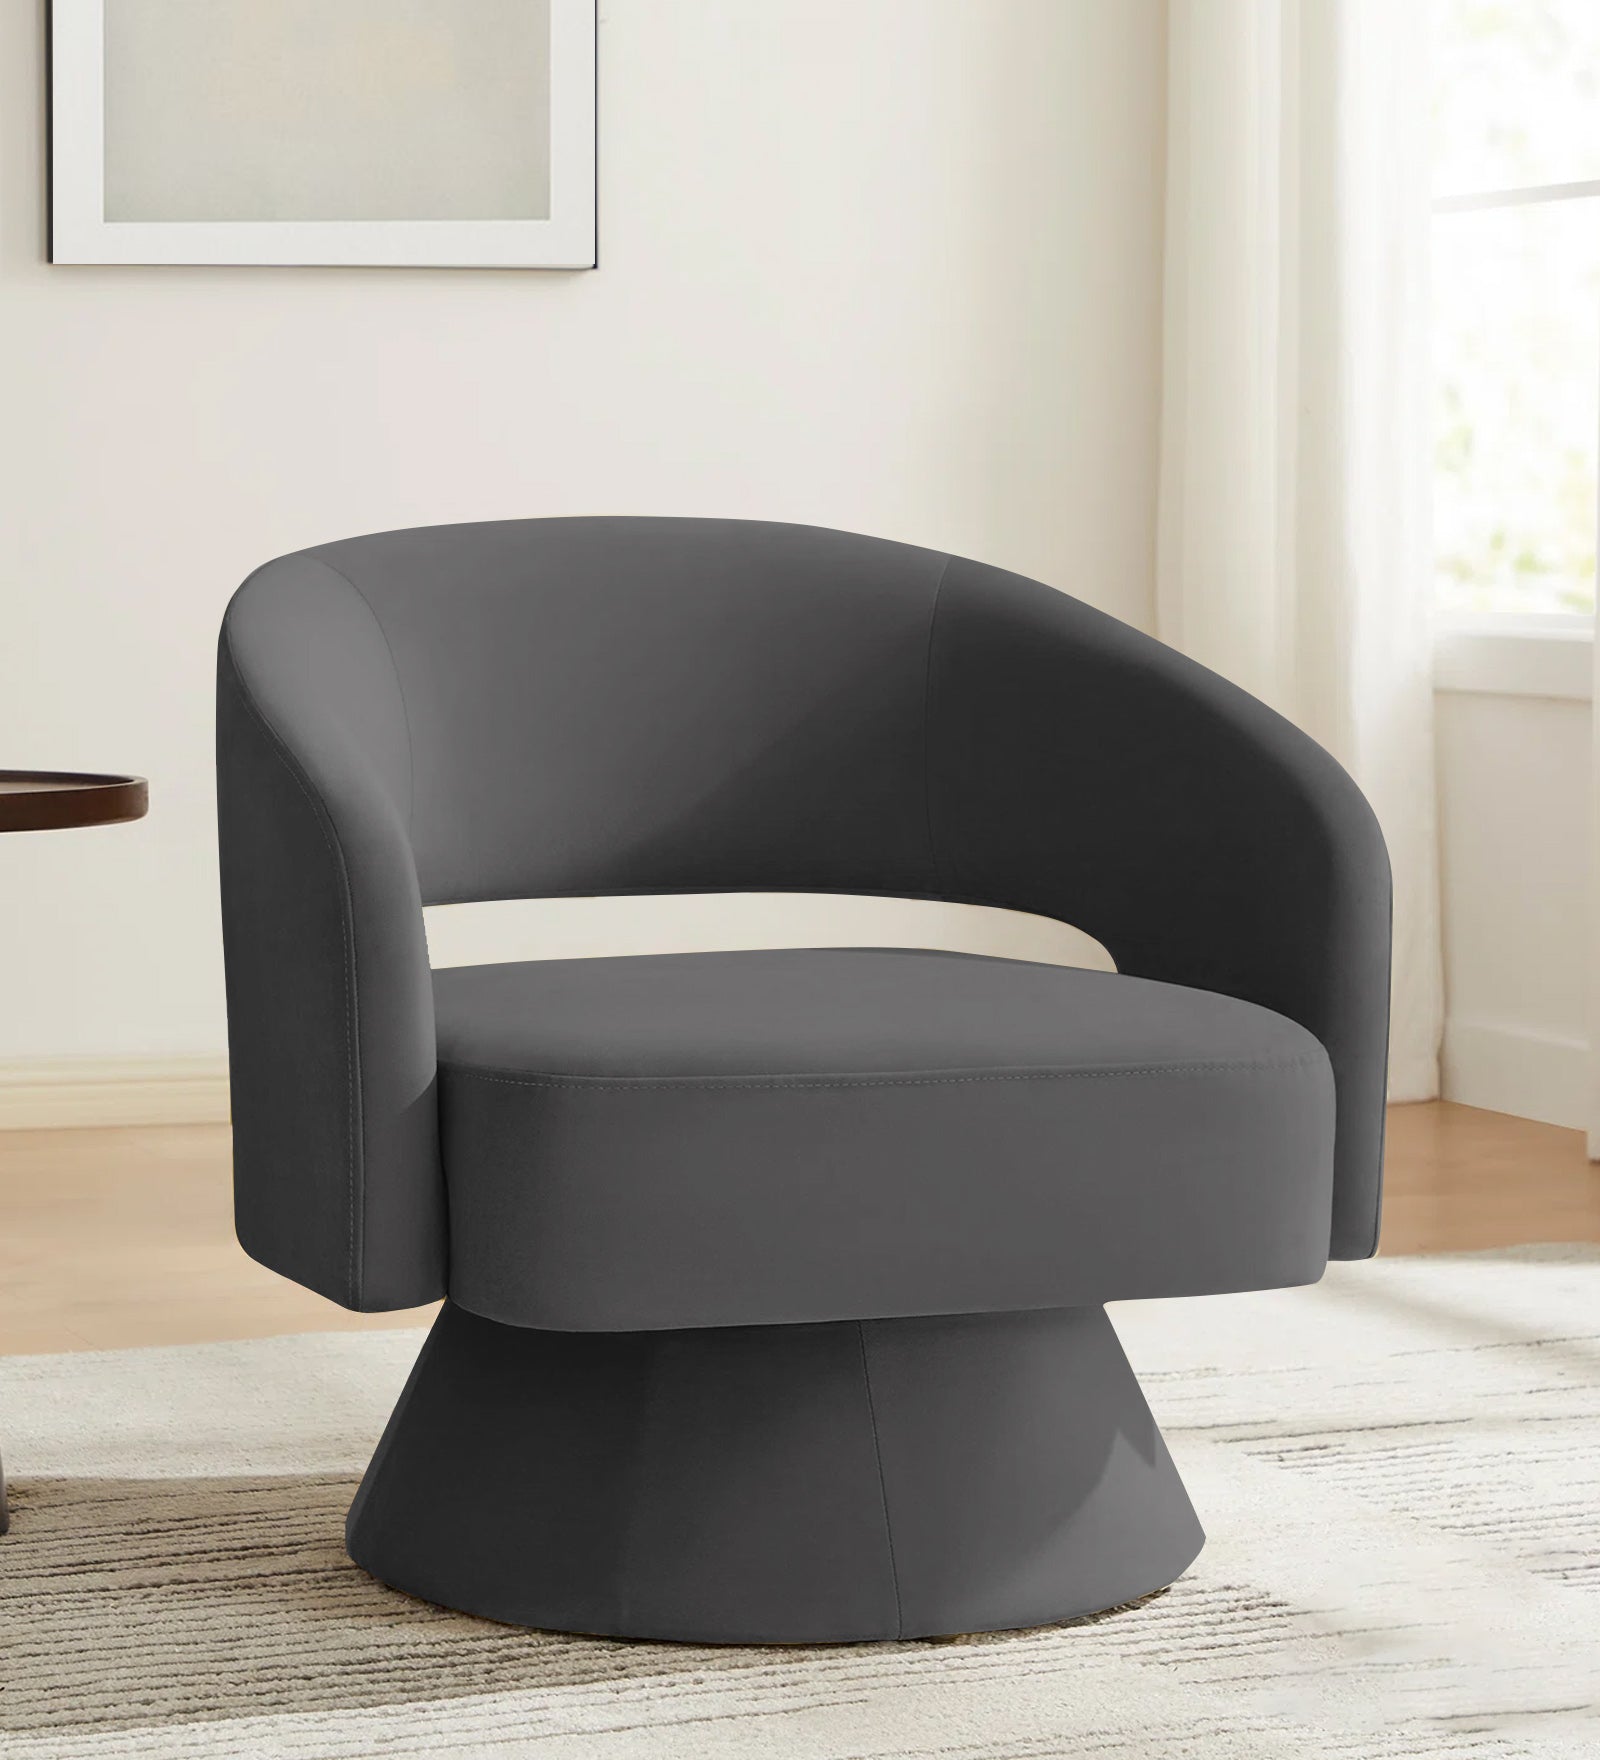 Pendra Velvet Swivel Chair in Davy Grey Colour